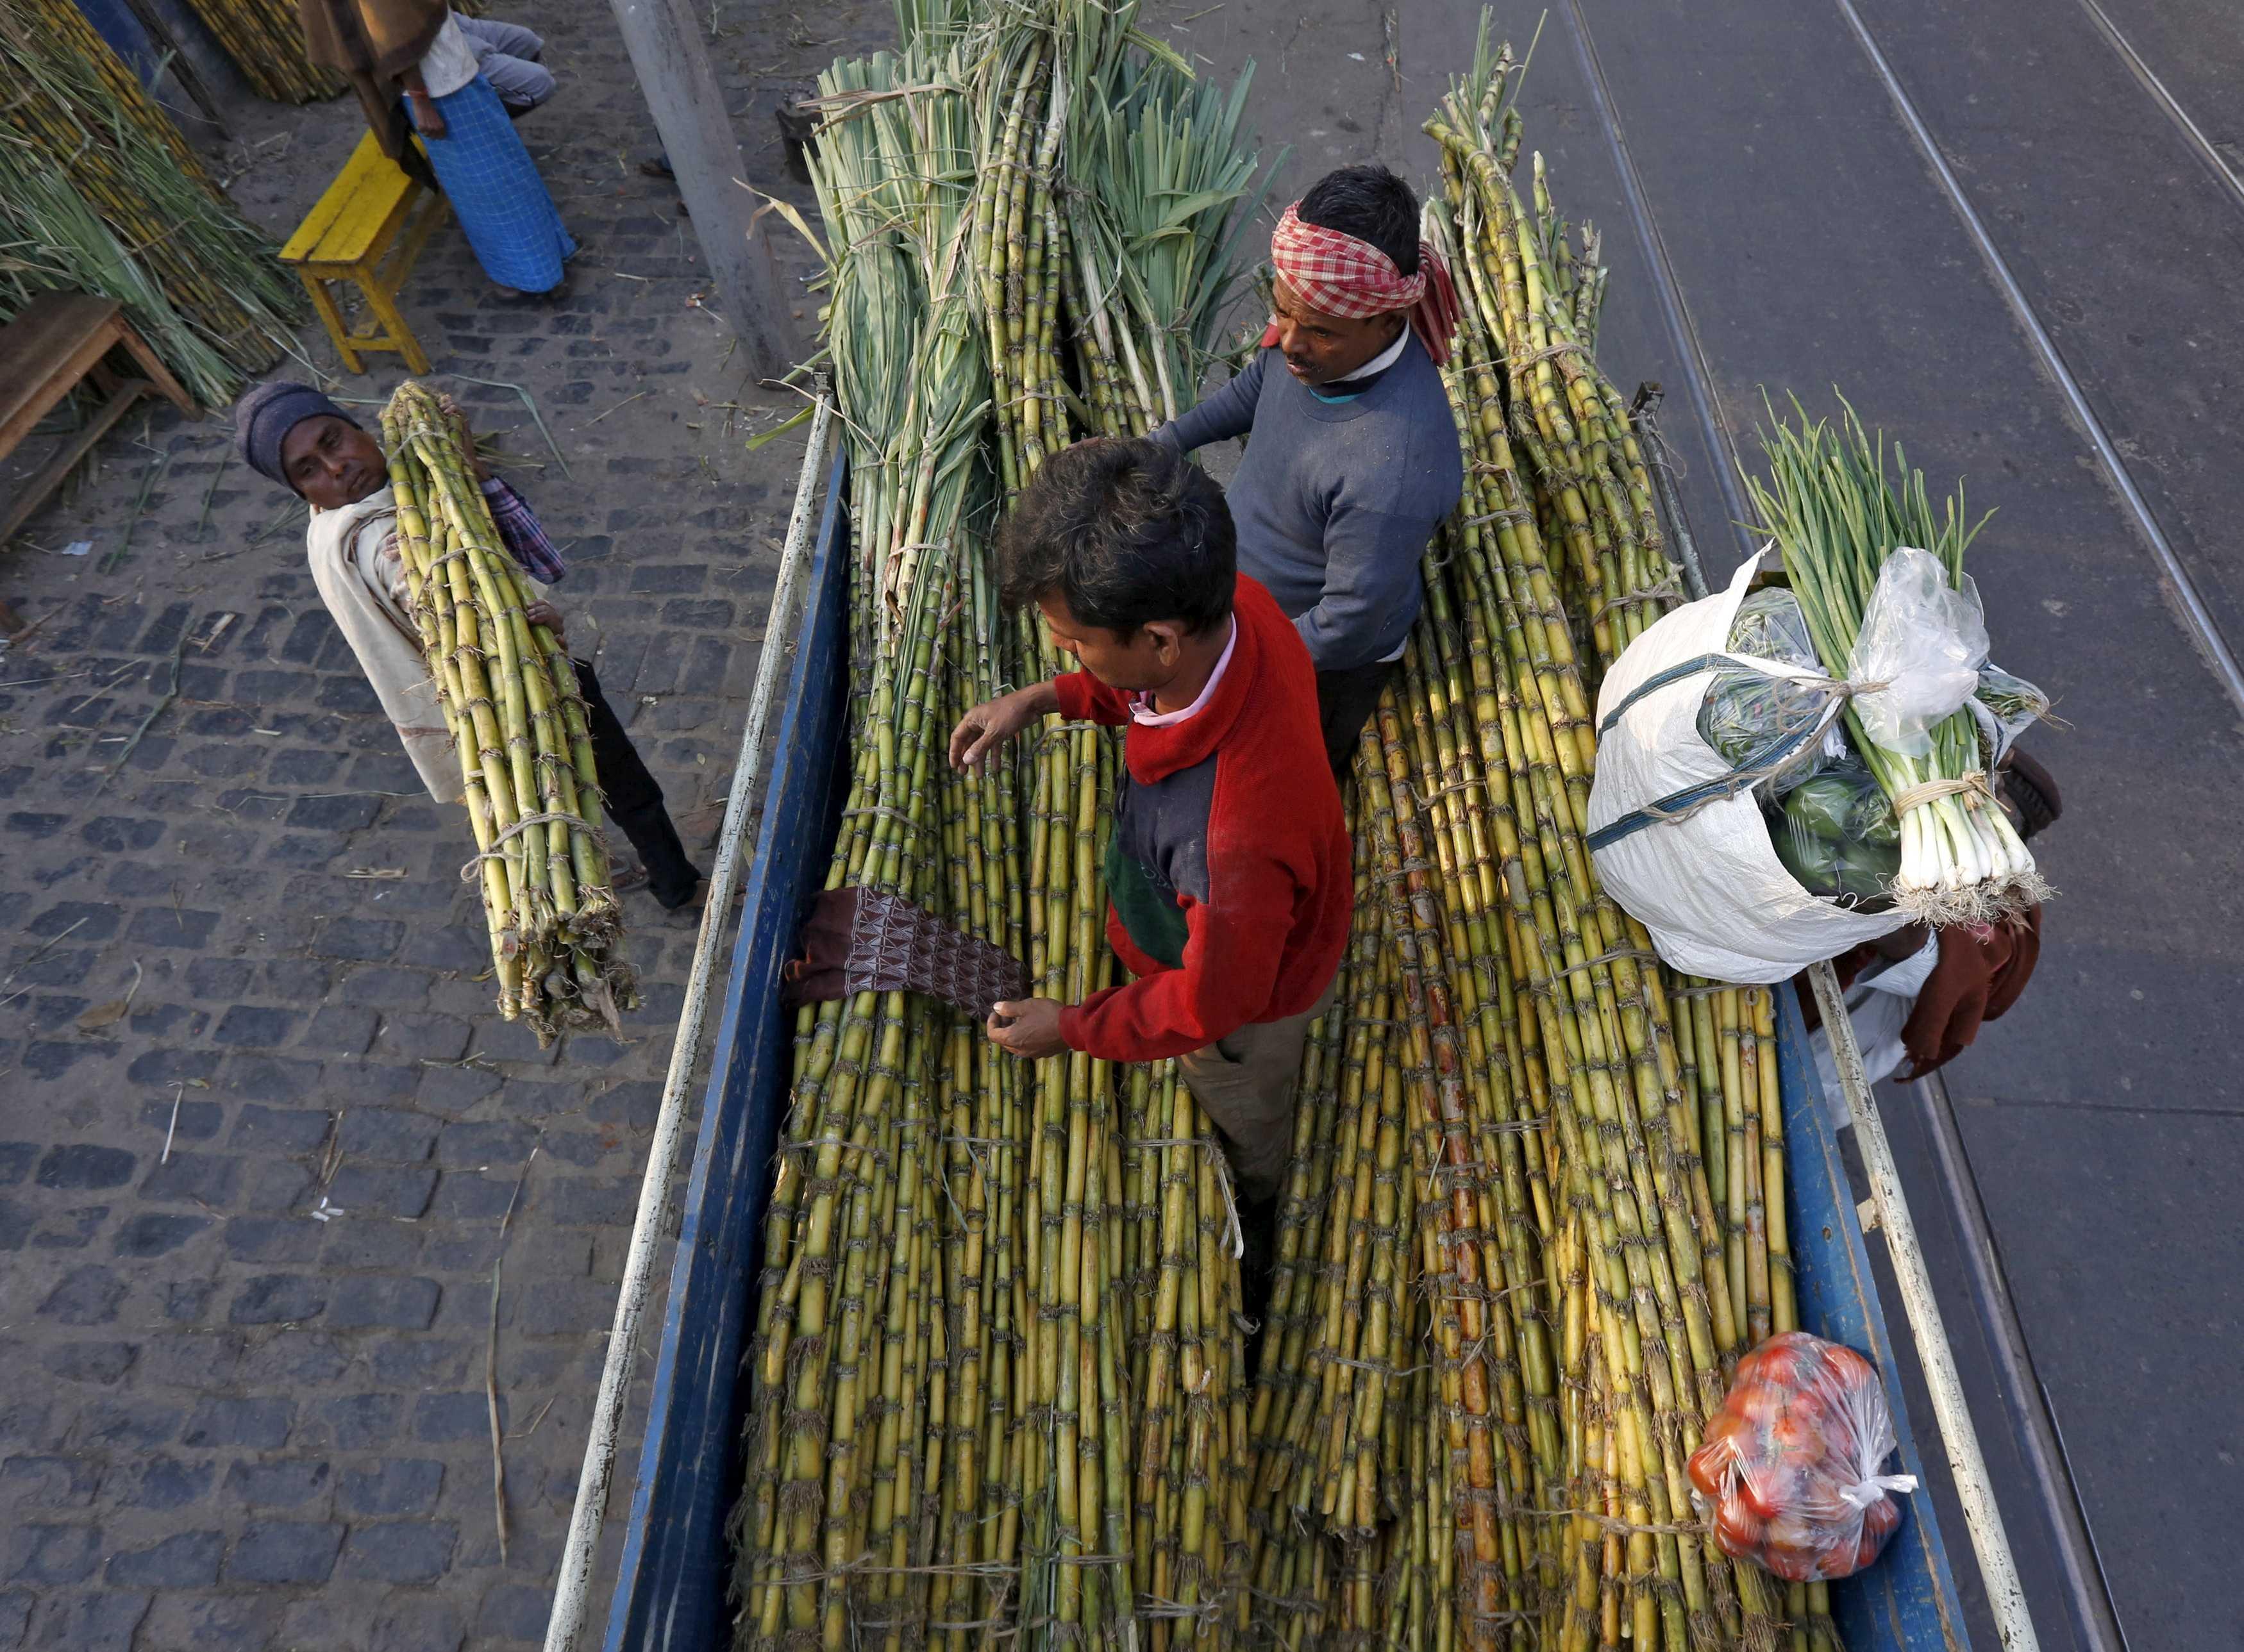 Labourers load sugarcane into a load carrier at a wholesale sugarcane market in Kolkata, India, Jan 11, 2016. Photo: Reuters